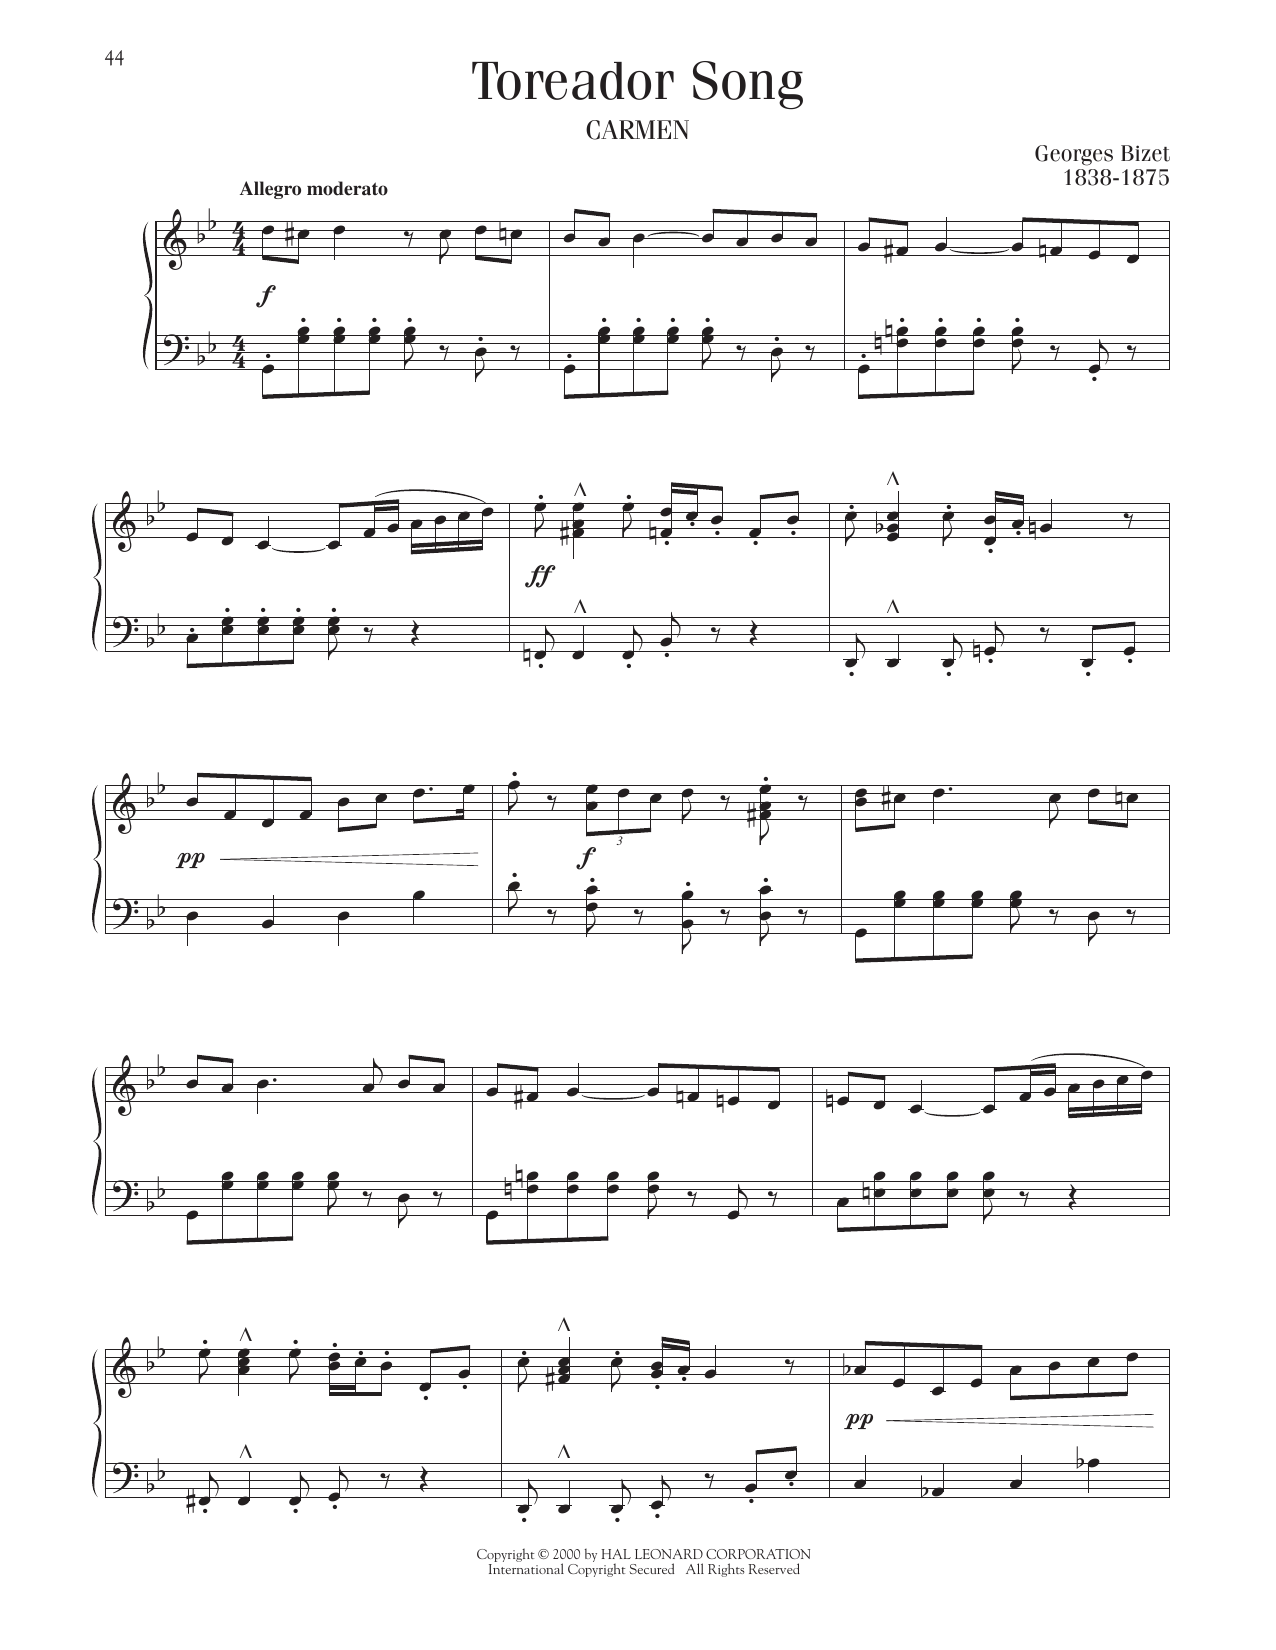 Georges Bizet Toreador Song sheet music notes printable PDF score